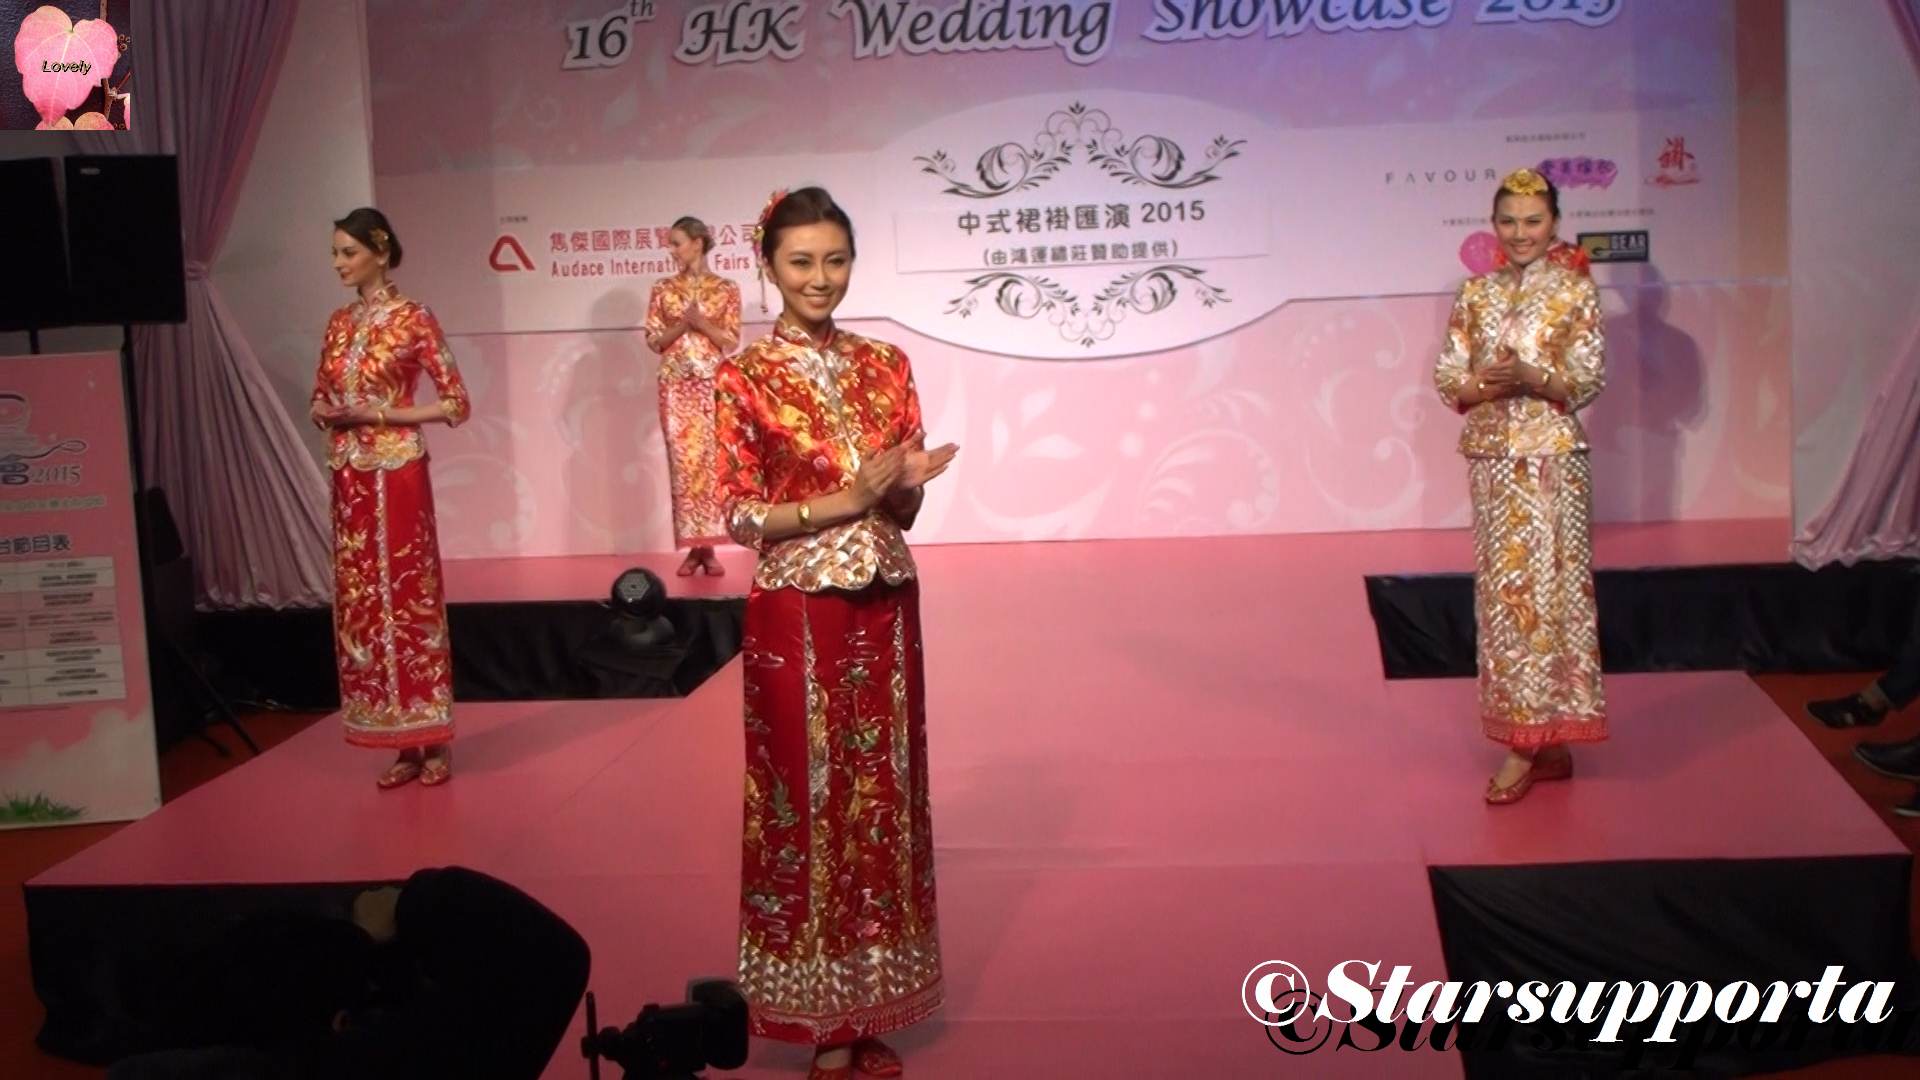 20150110 中式裙褂匯演 2015 @ 16th HK Wedding Showcase 2015 @ 香港 Emax